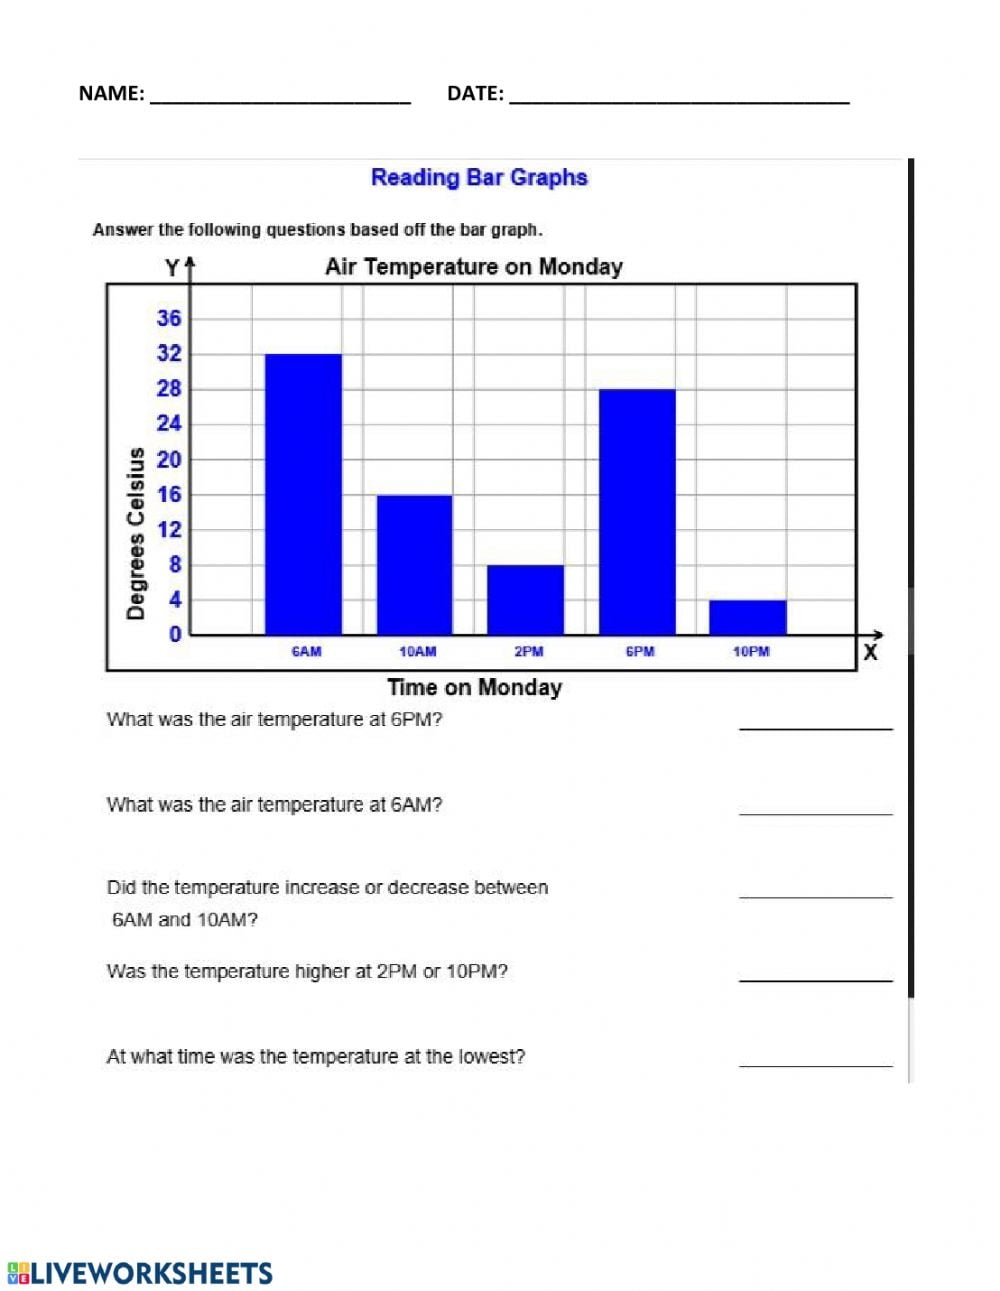 Reading Bar Graphs 2 Worksheet